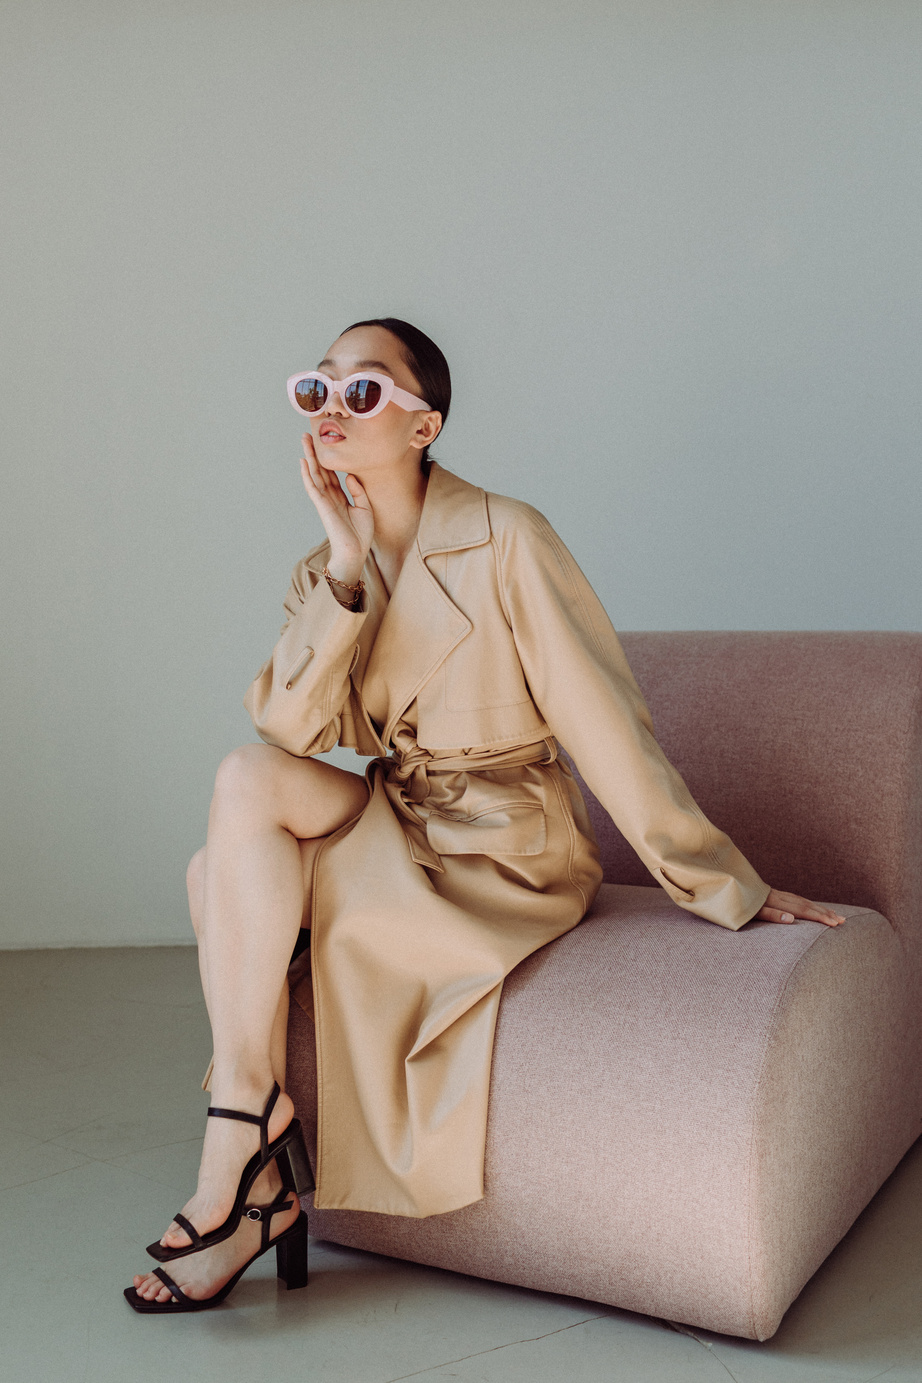 Stylish Woman in Coat and Sunglasses